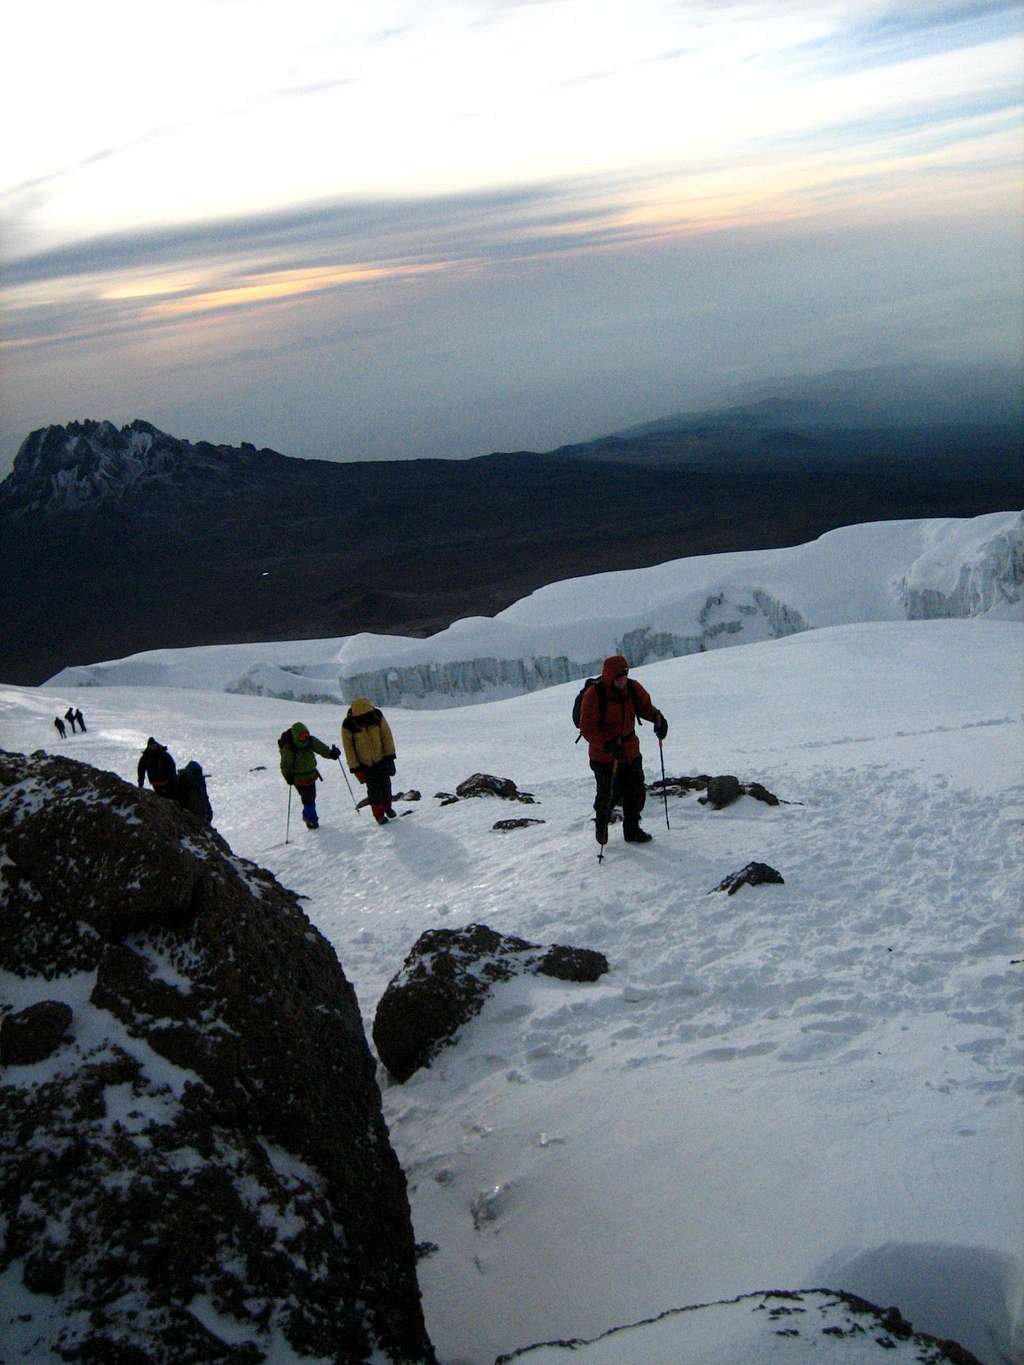 Aproaching the summit of Uhuru Peak